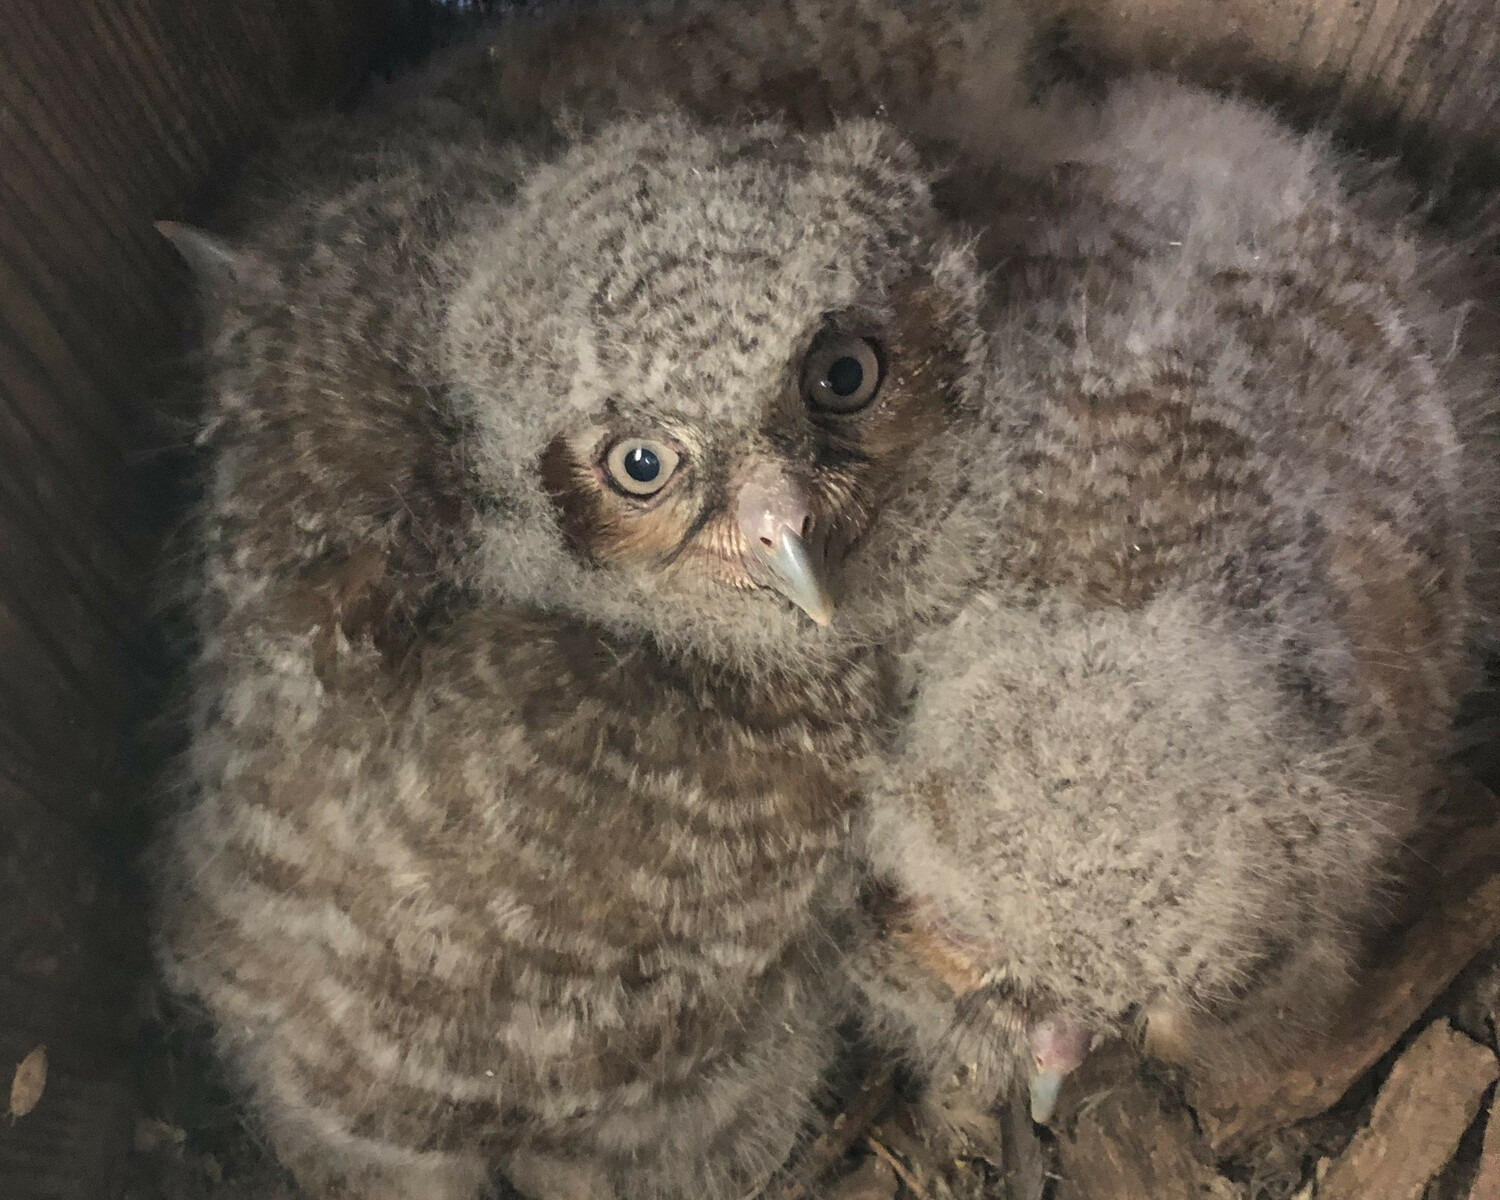 Alfie's owlets at 17 days old. CARL SAFINA